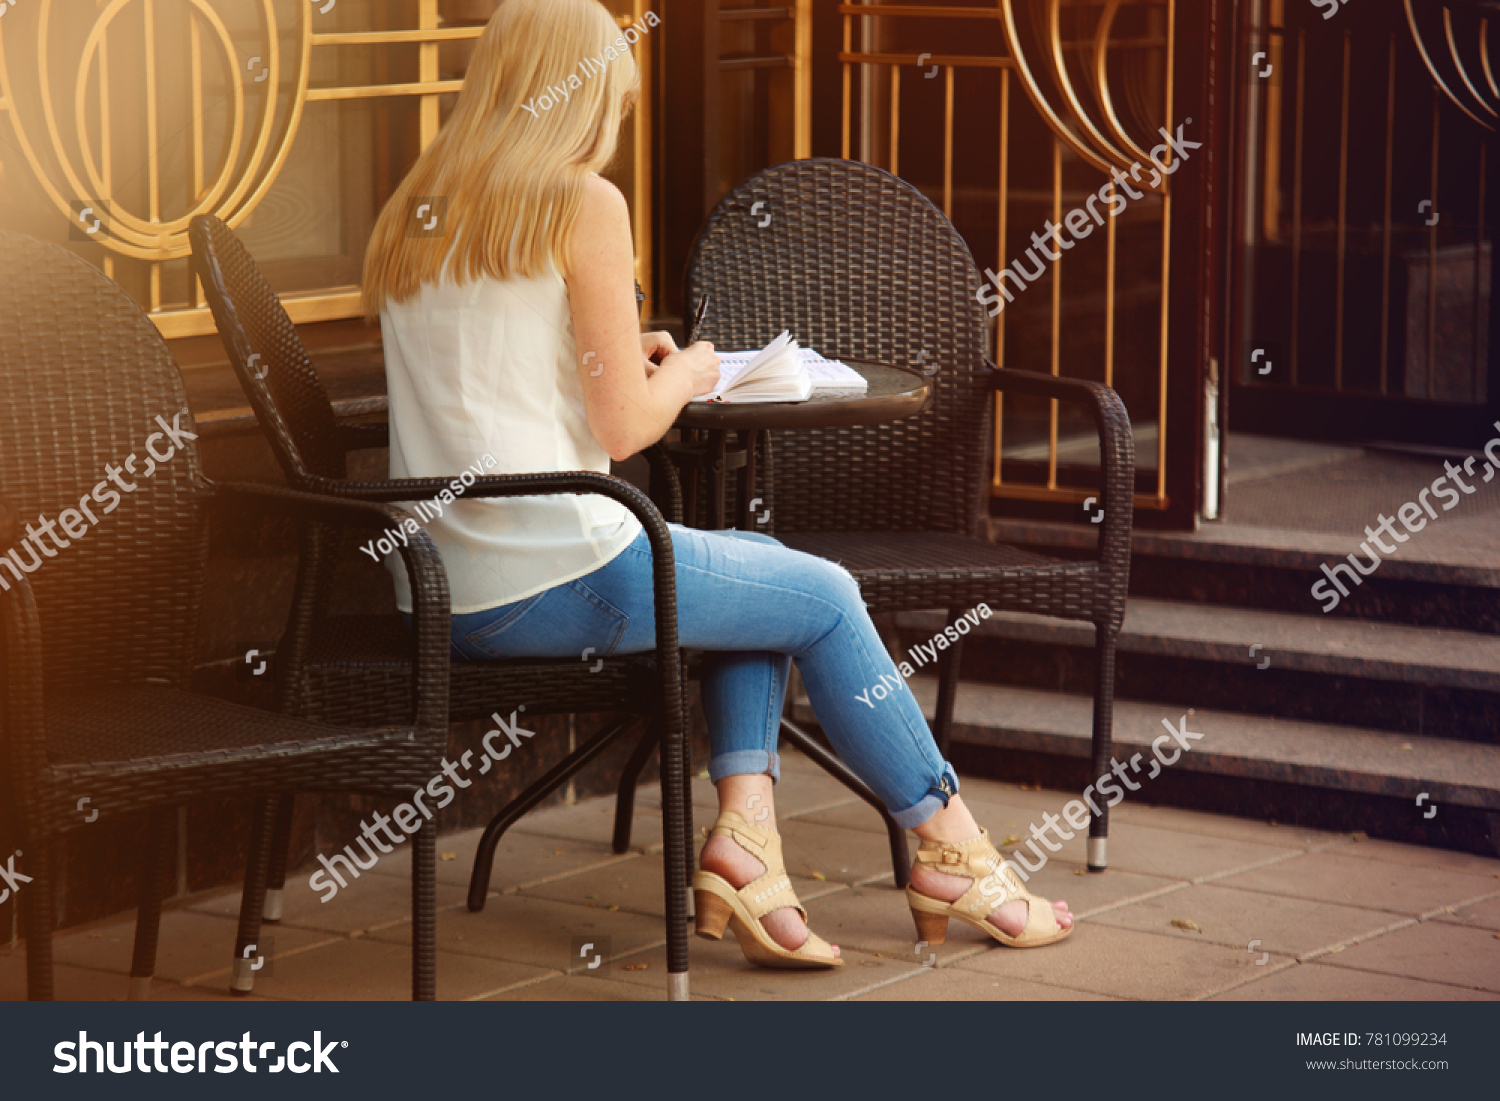 The Coffee Shop Feet Lady 1